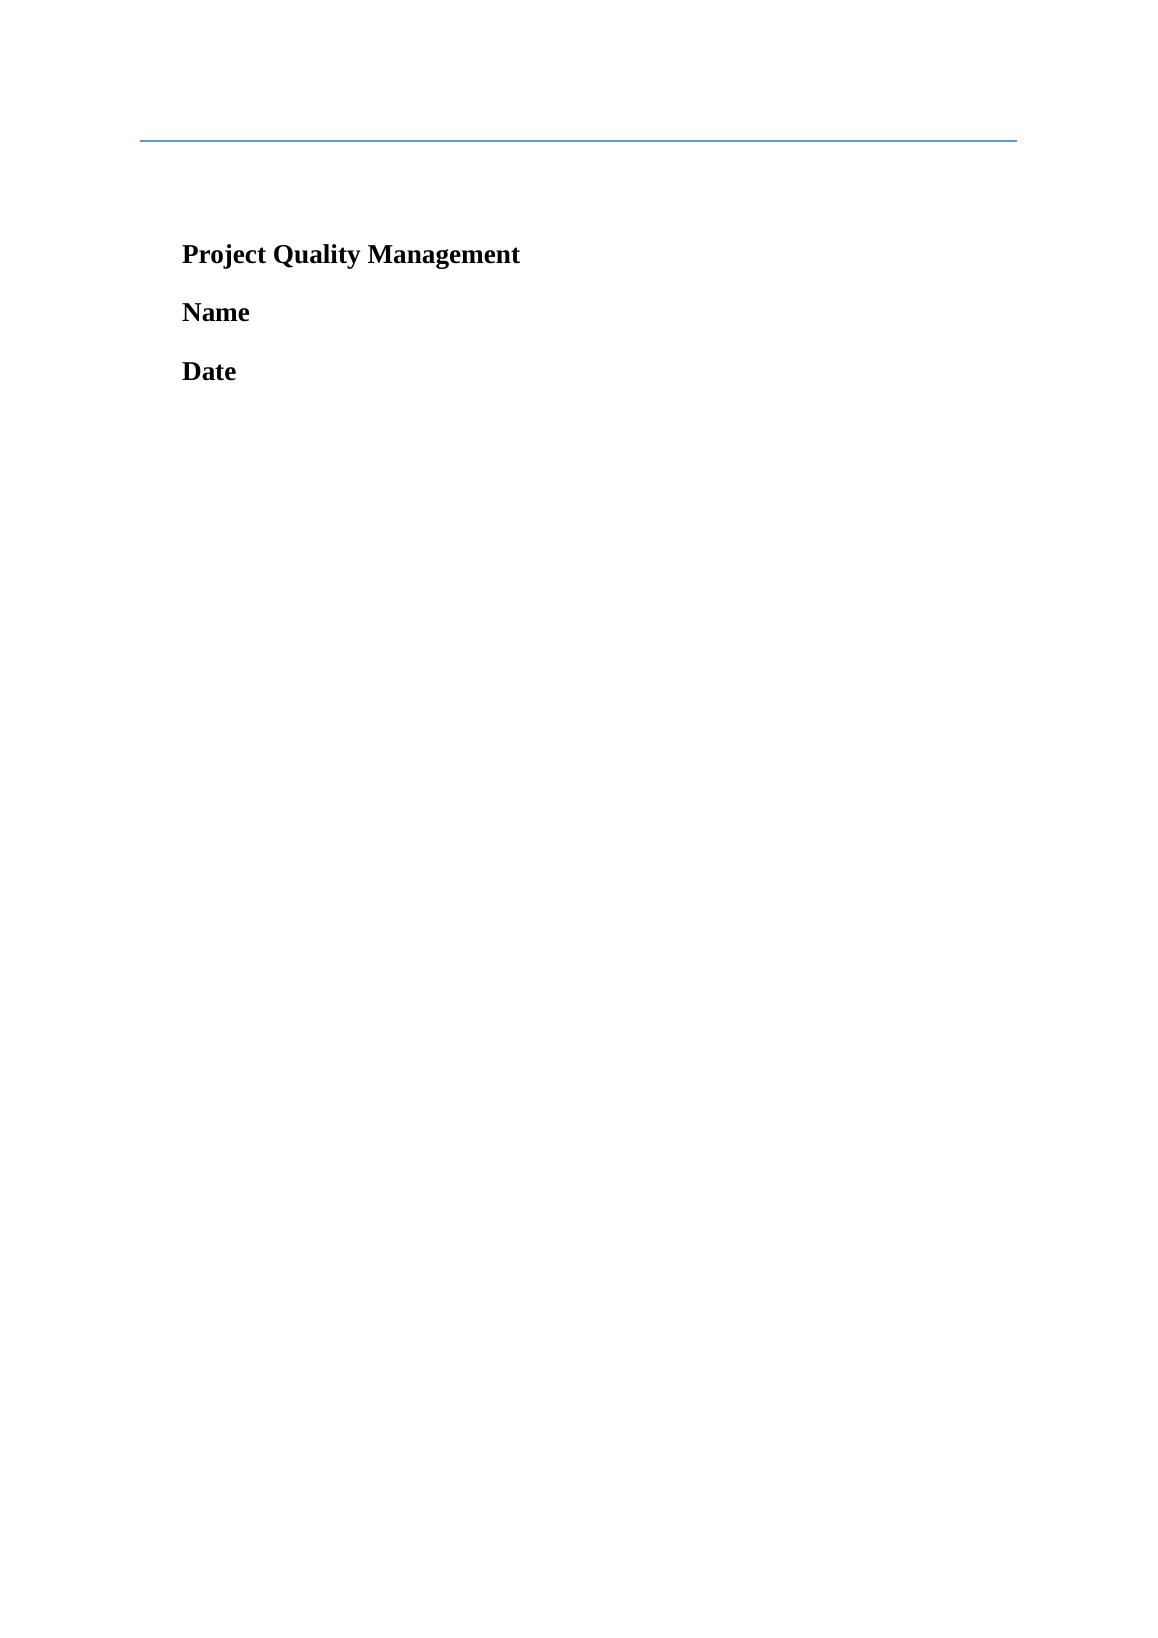 Project Quality Management - Doc_1